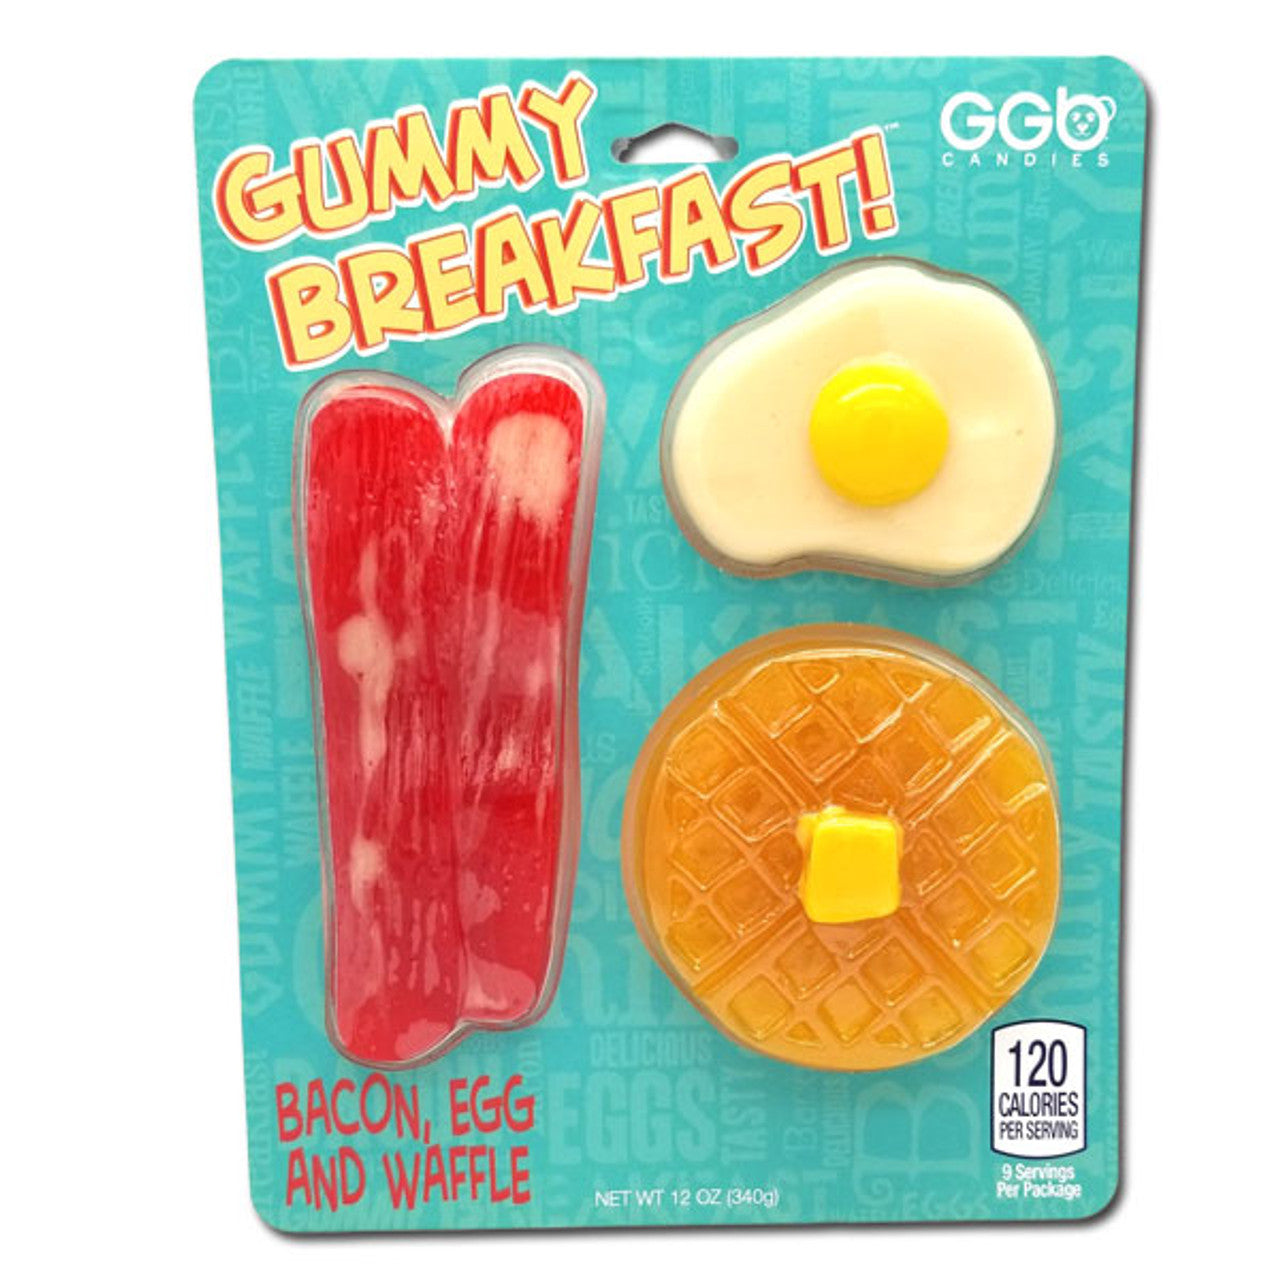 Gummy Breakfast Bacon, Egg, and Waffle